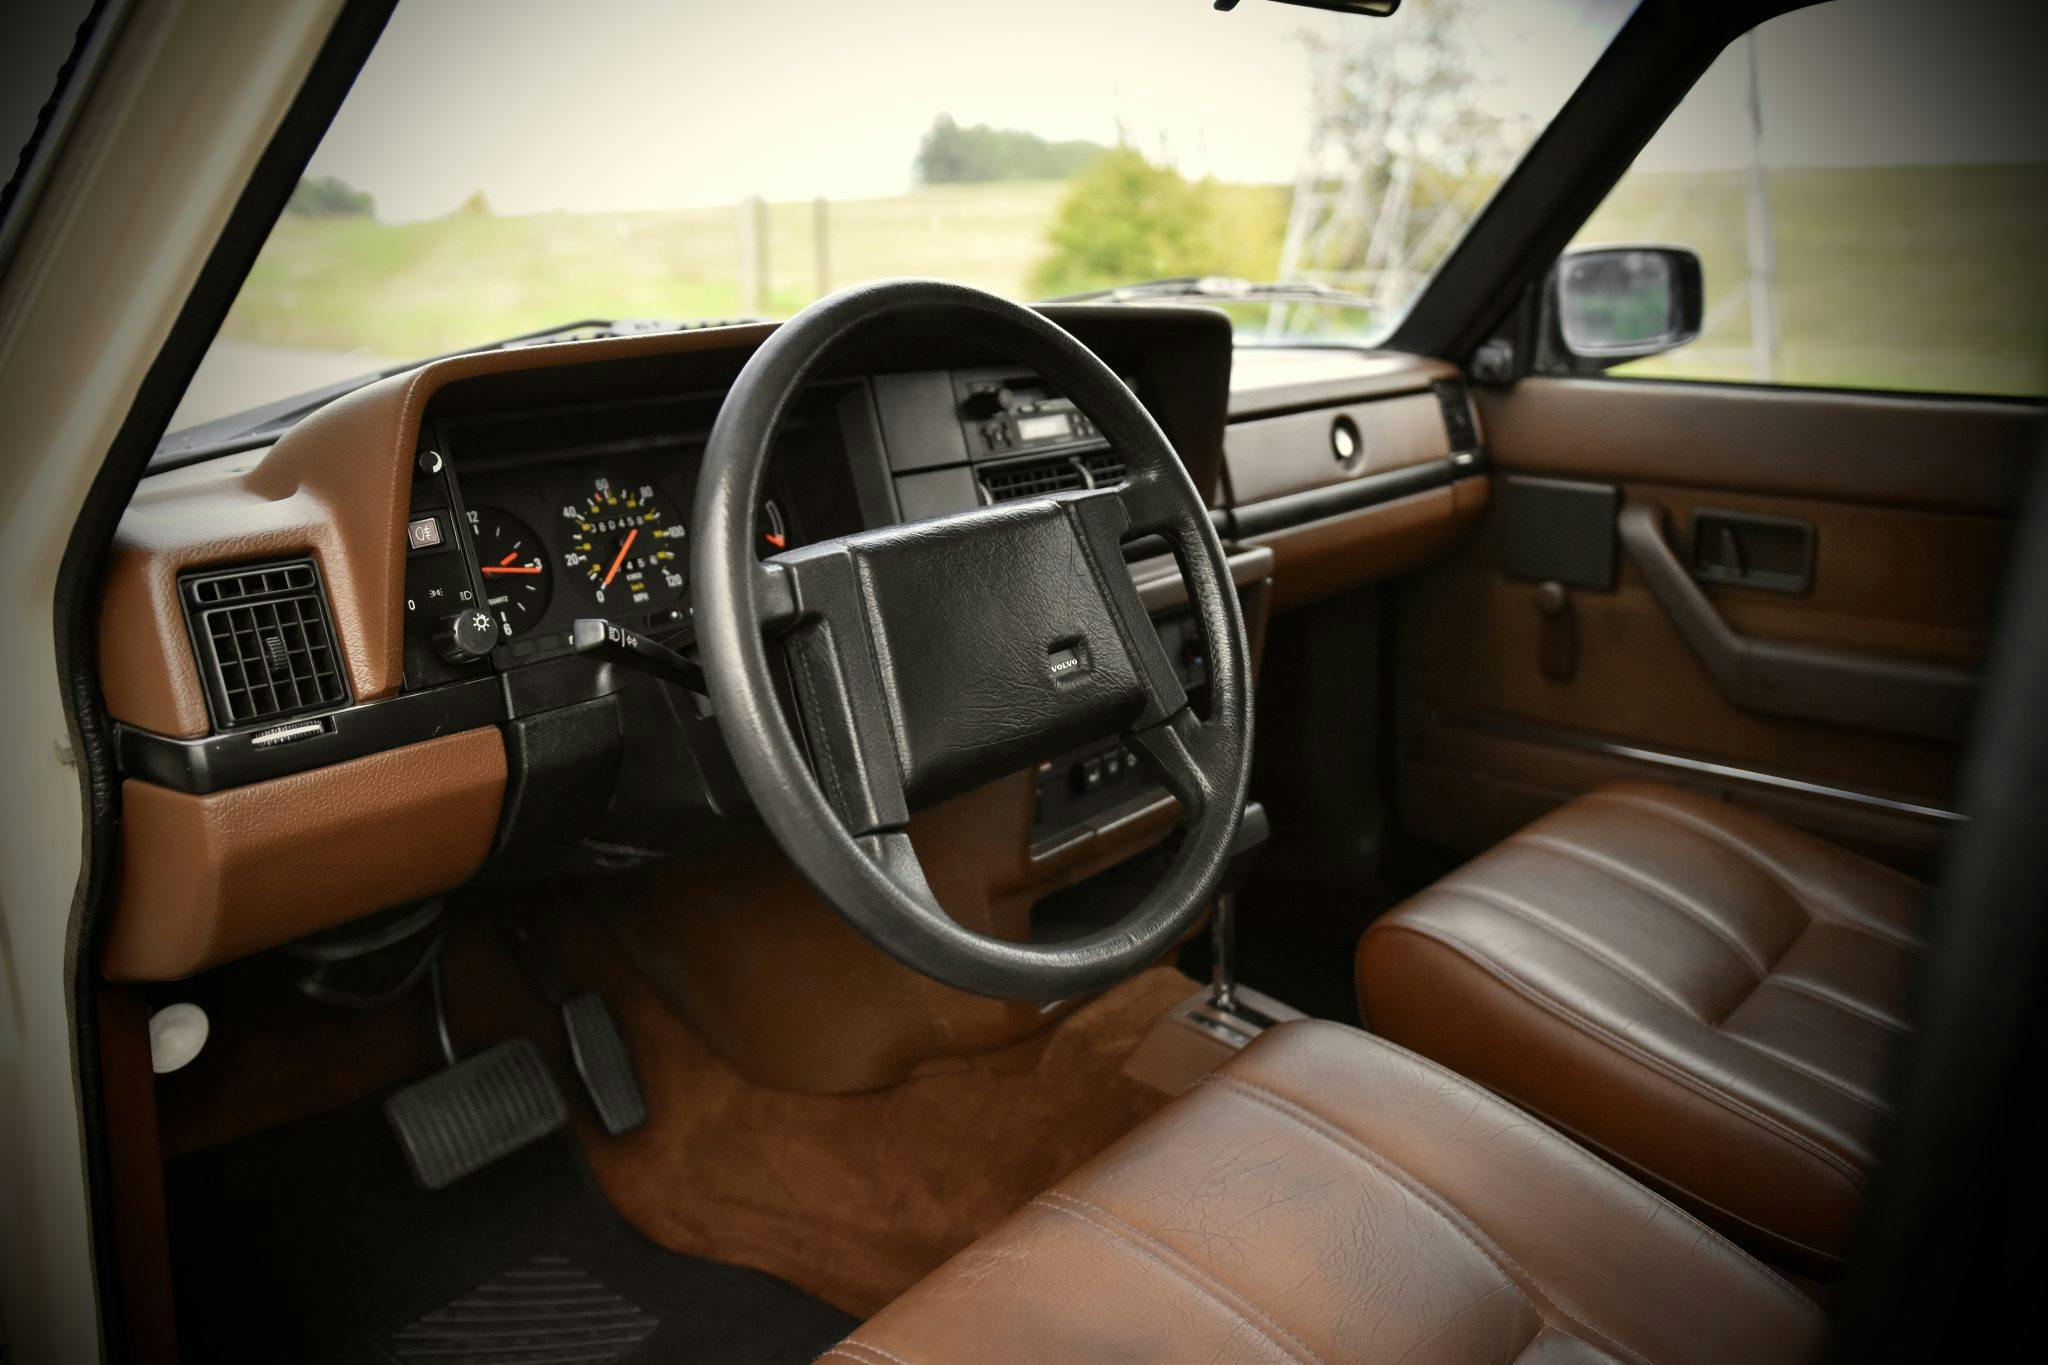 1987 Volvo 240 Wagon DL interior front angle